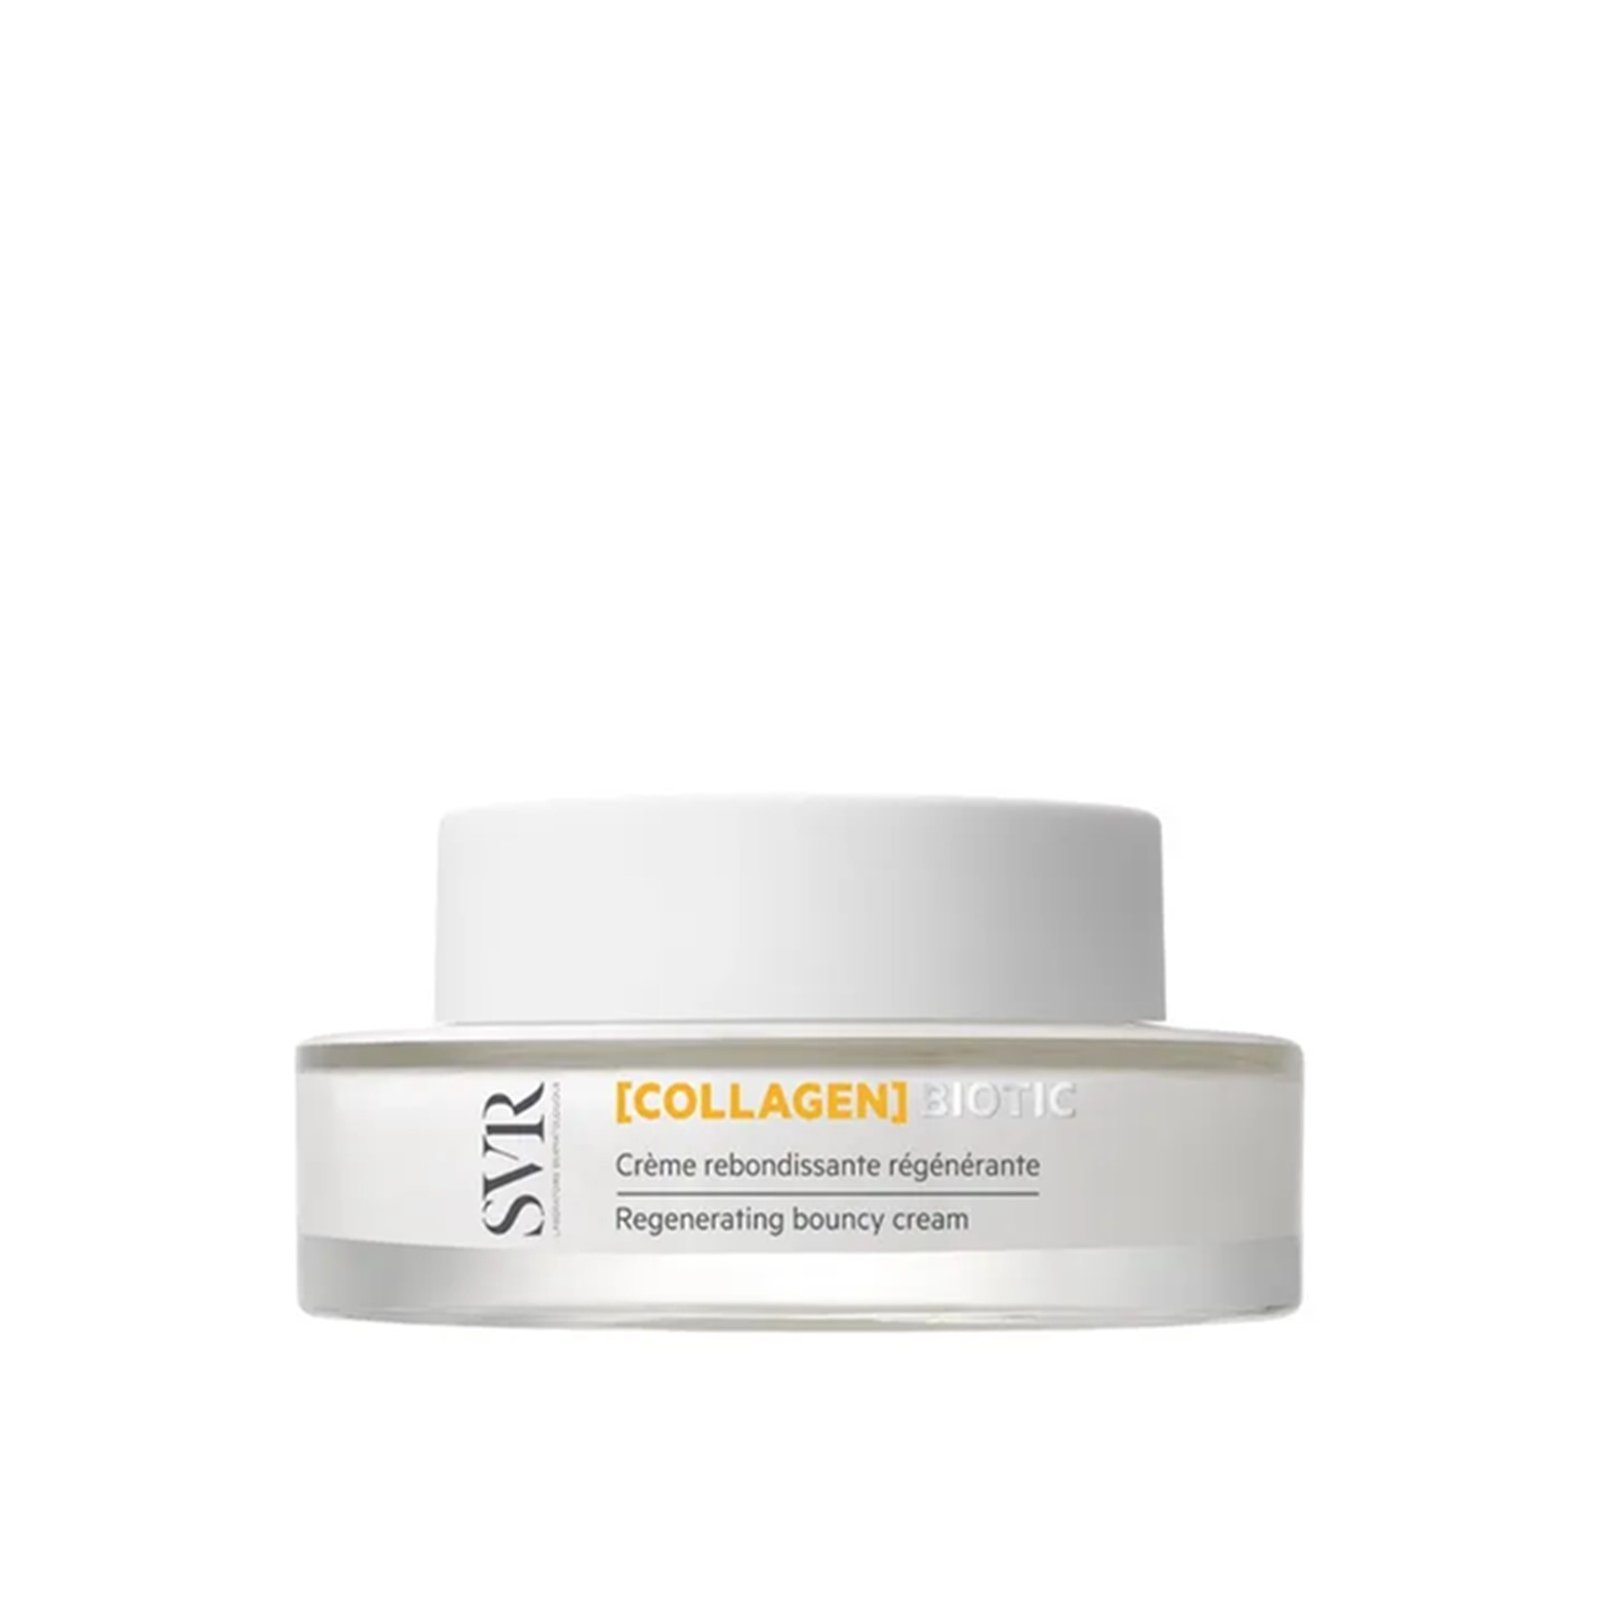 SVR [Collagen] Biotic Regenerating Bouncy Cream 50ml